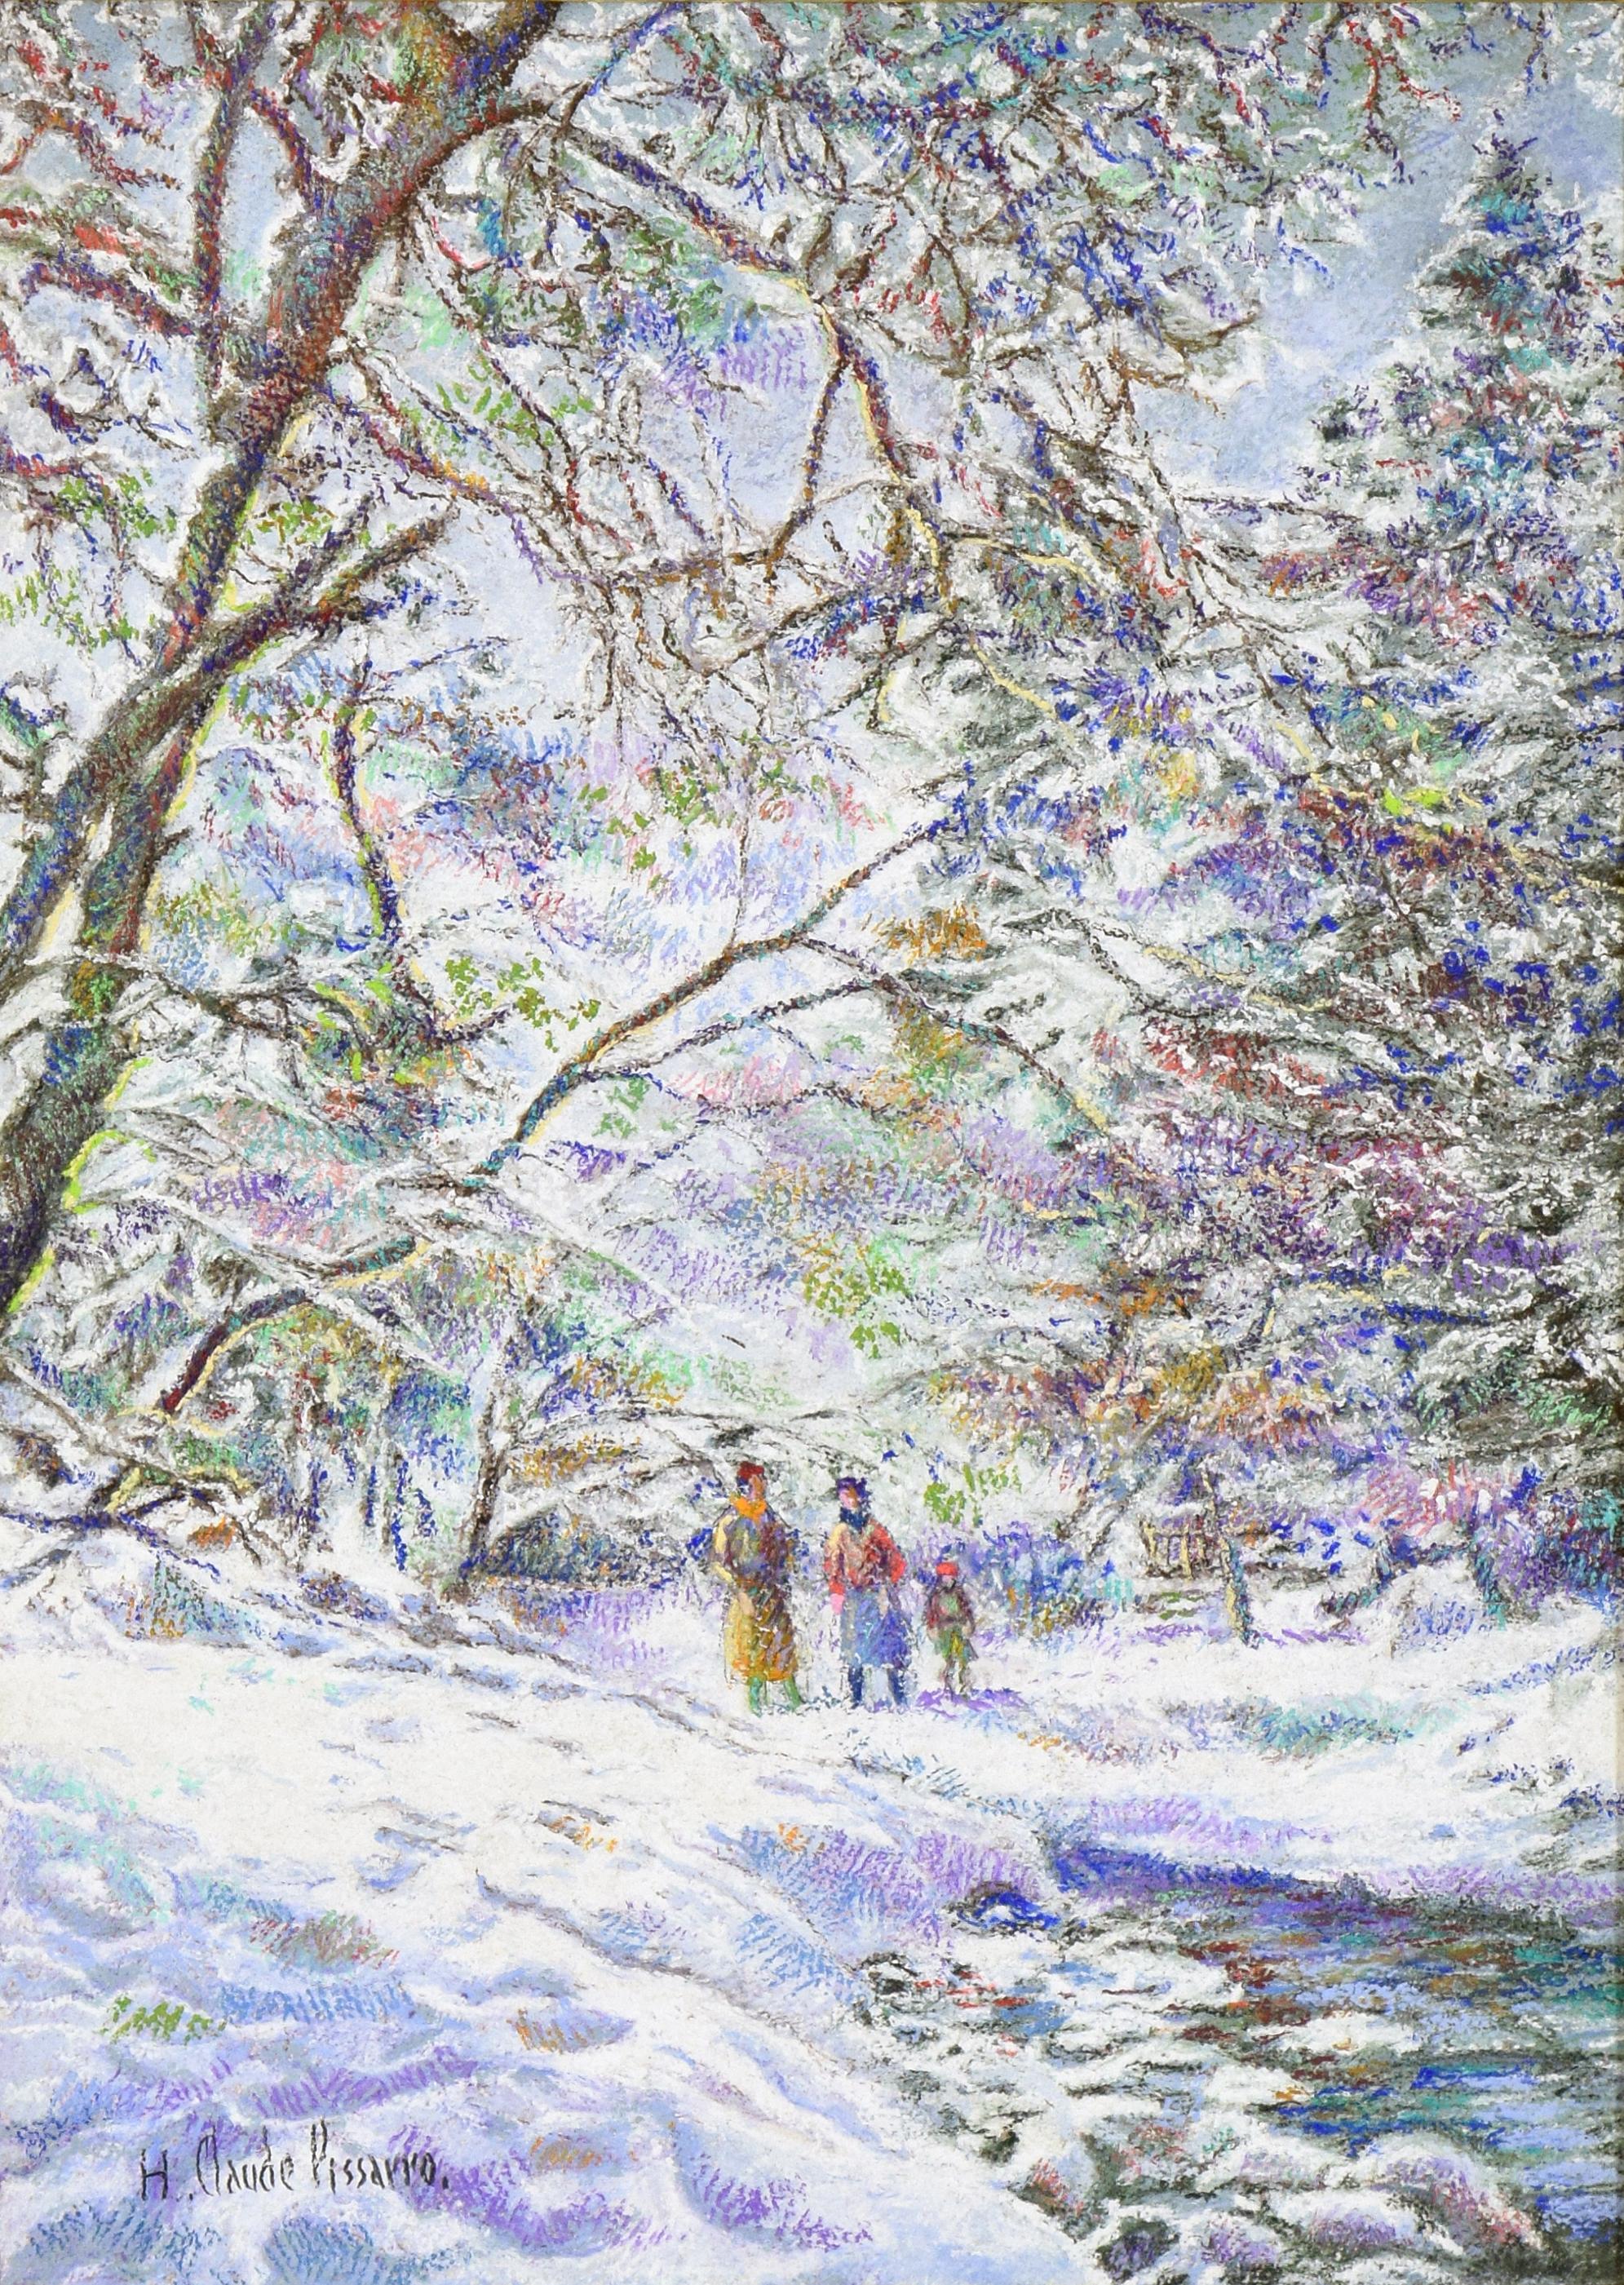 Snow scene by Hughes Claude Pissarro